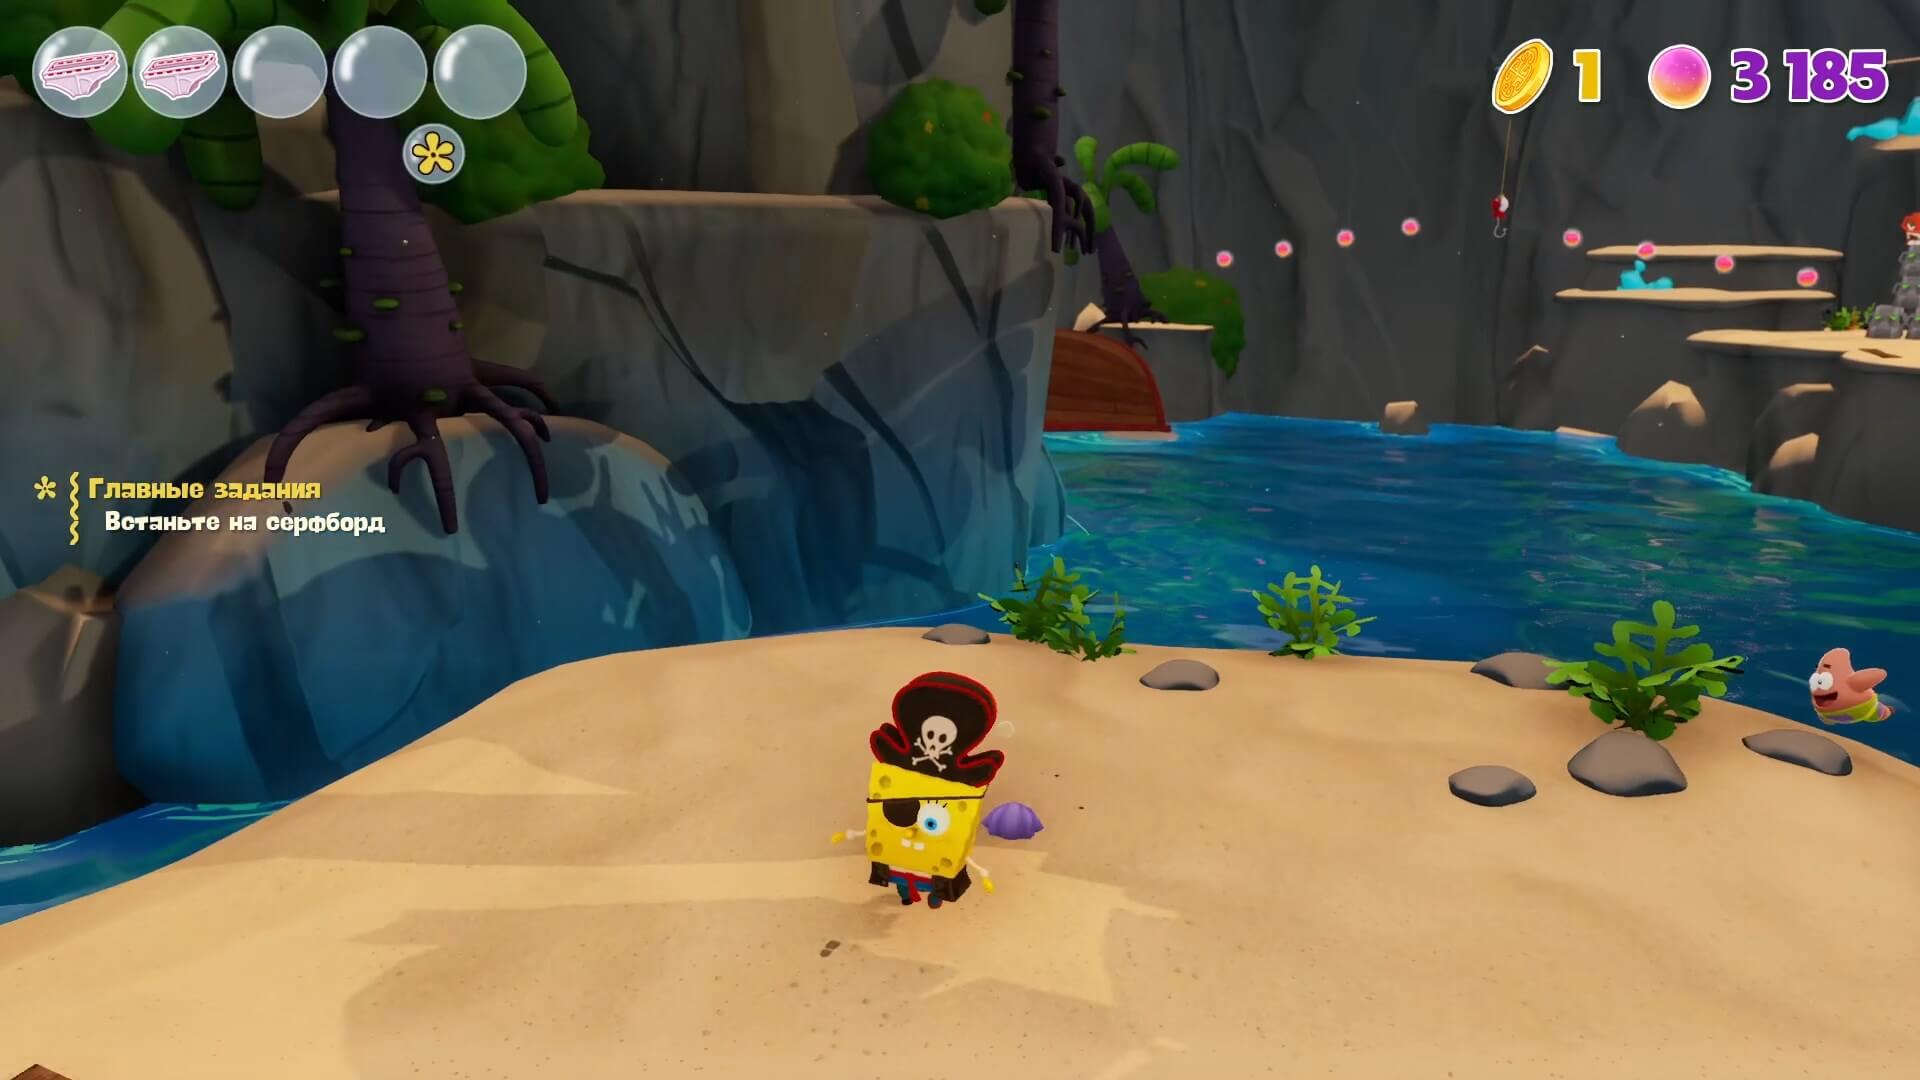 SpongeBob SquarePants - The Cosmic Shake - геймплей игры Windows